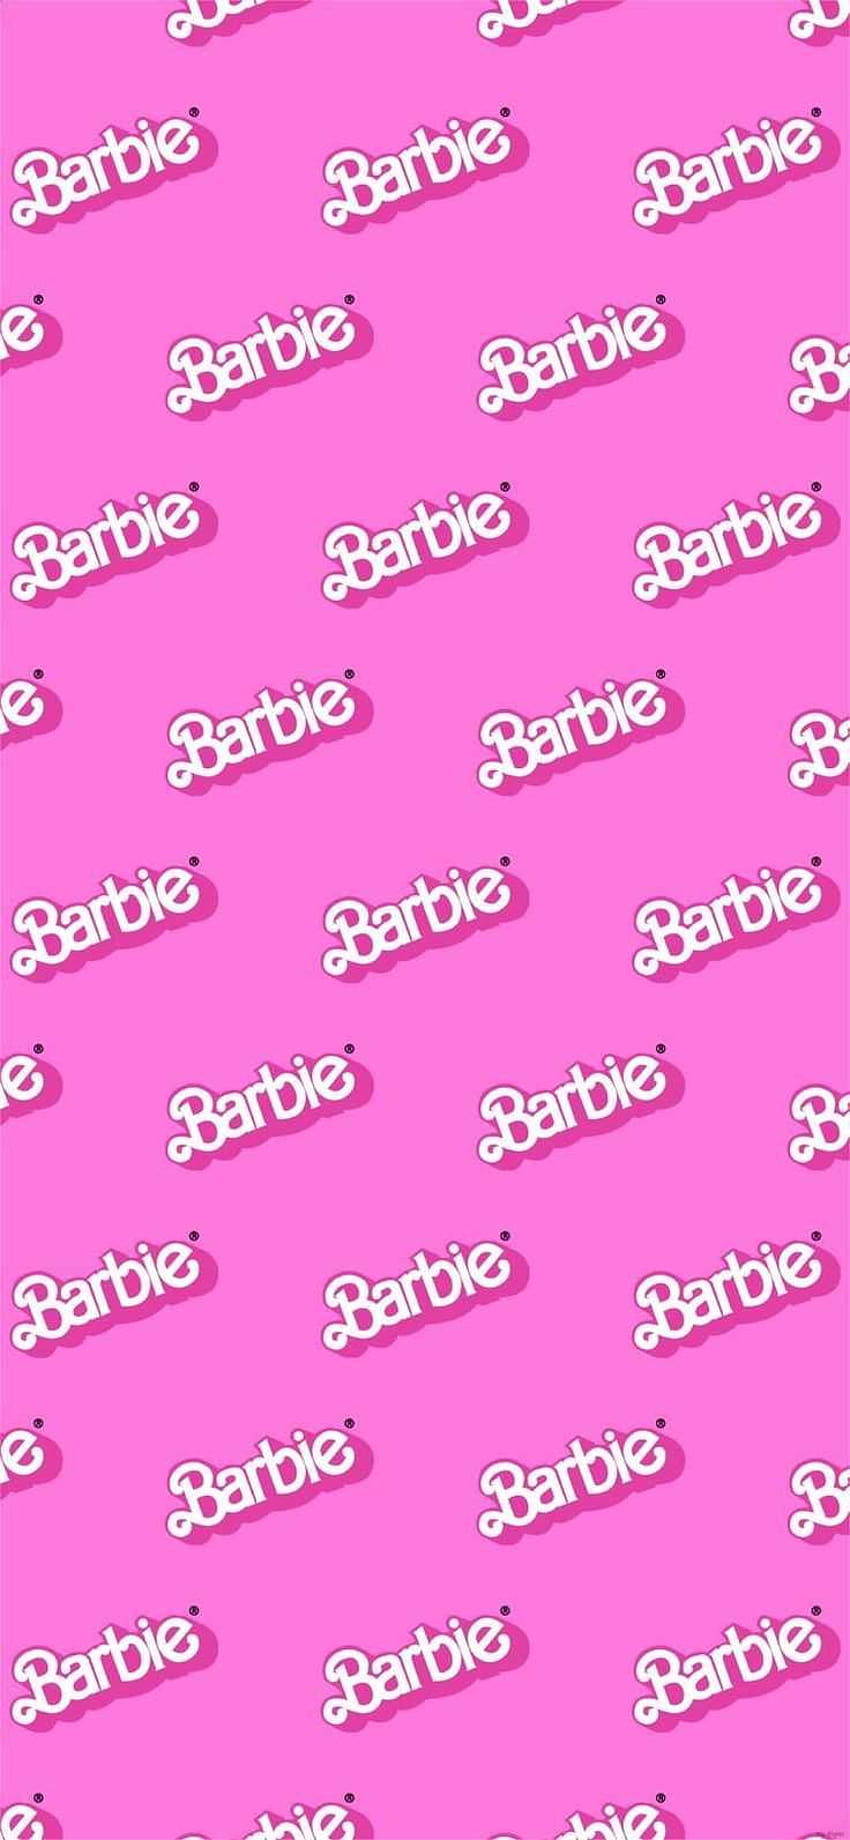 Barbie, logo malo fondo de pantalla del teléfono